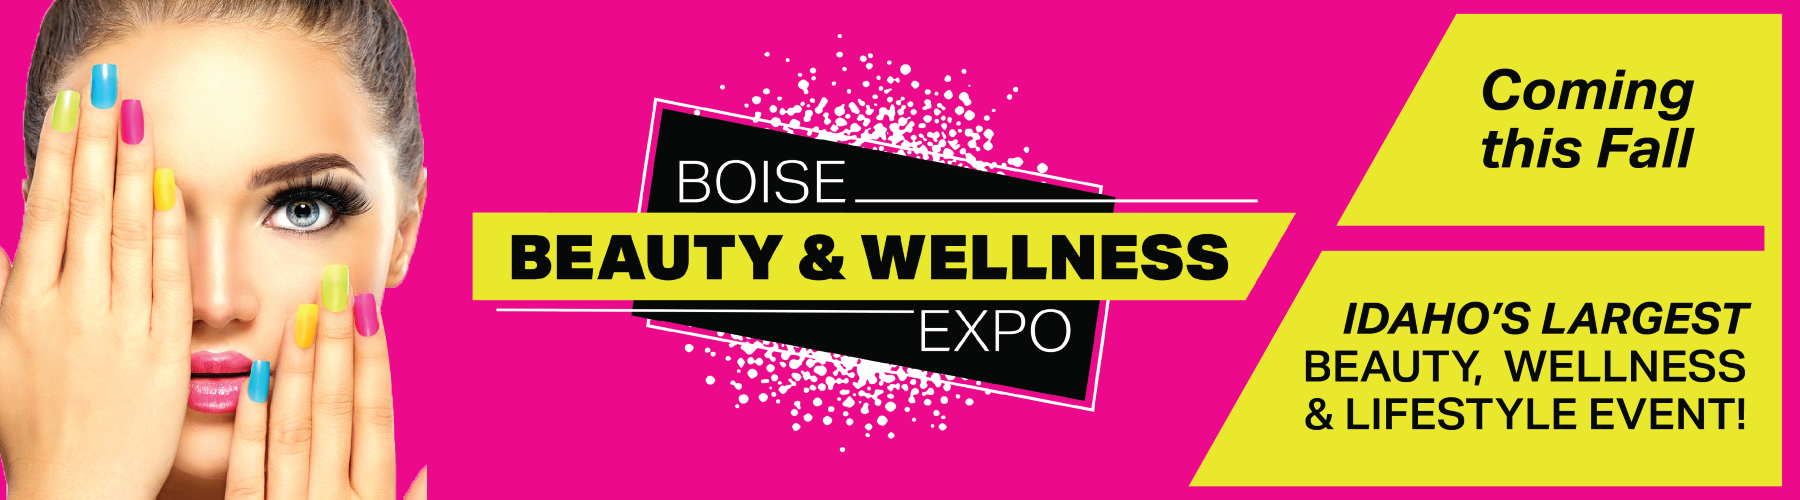 Boise Beauty & Wellness Expo